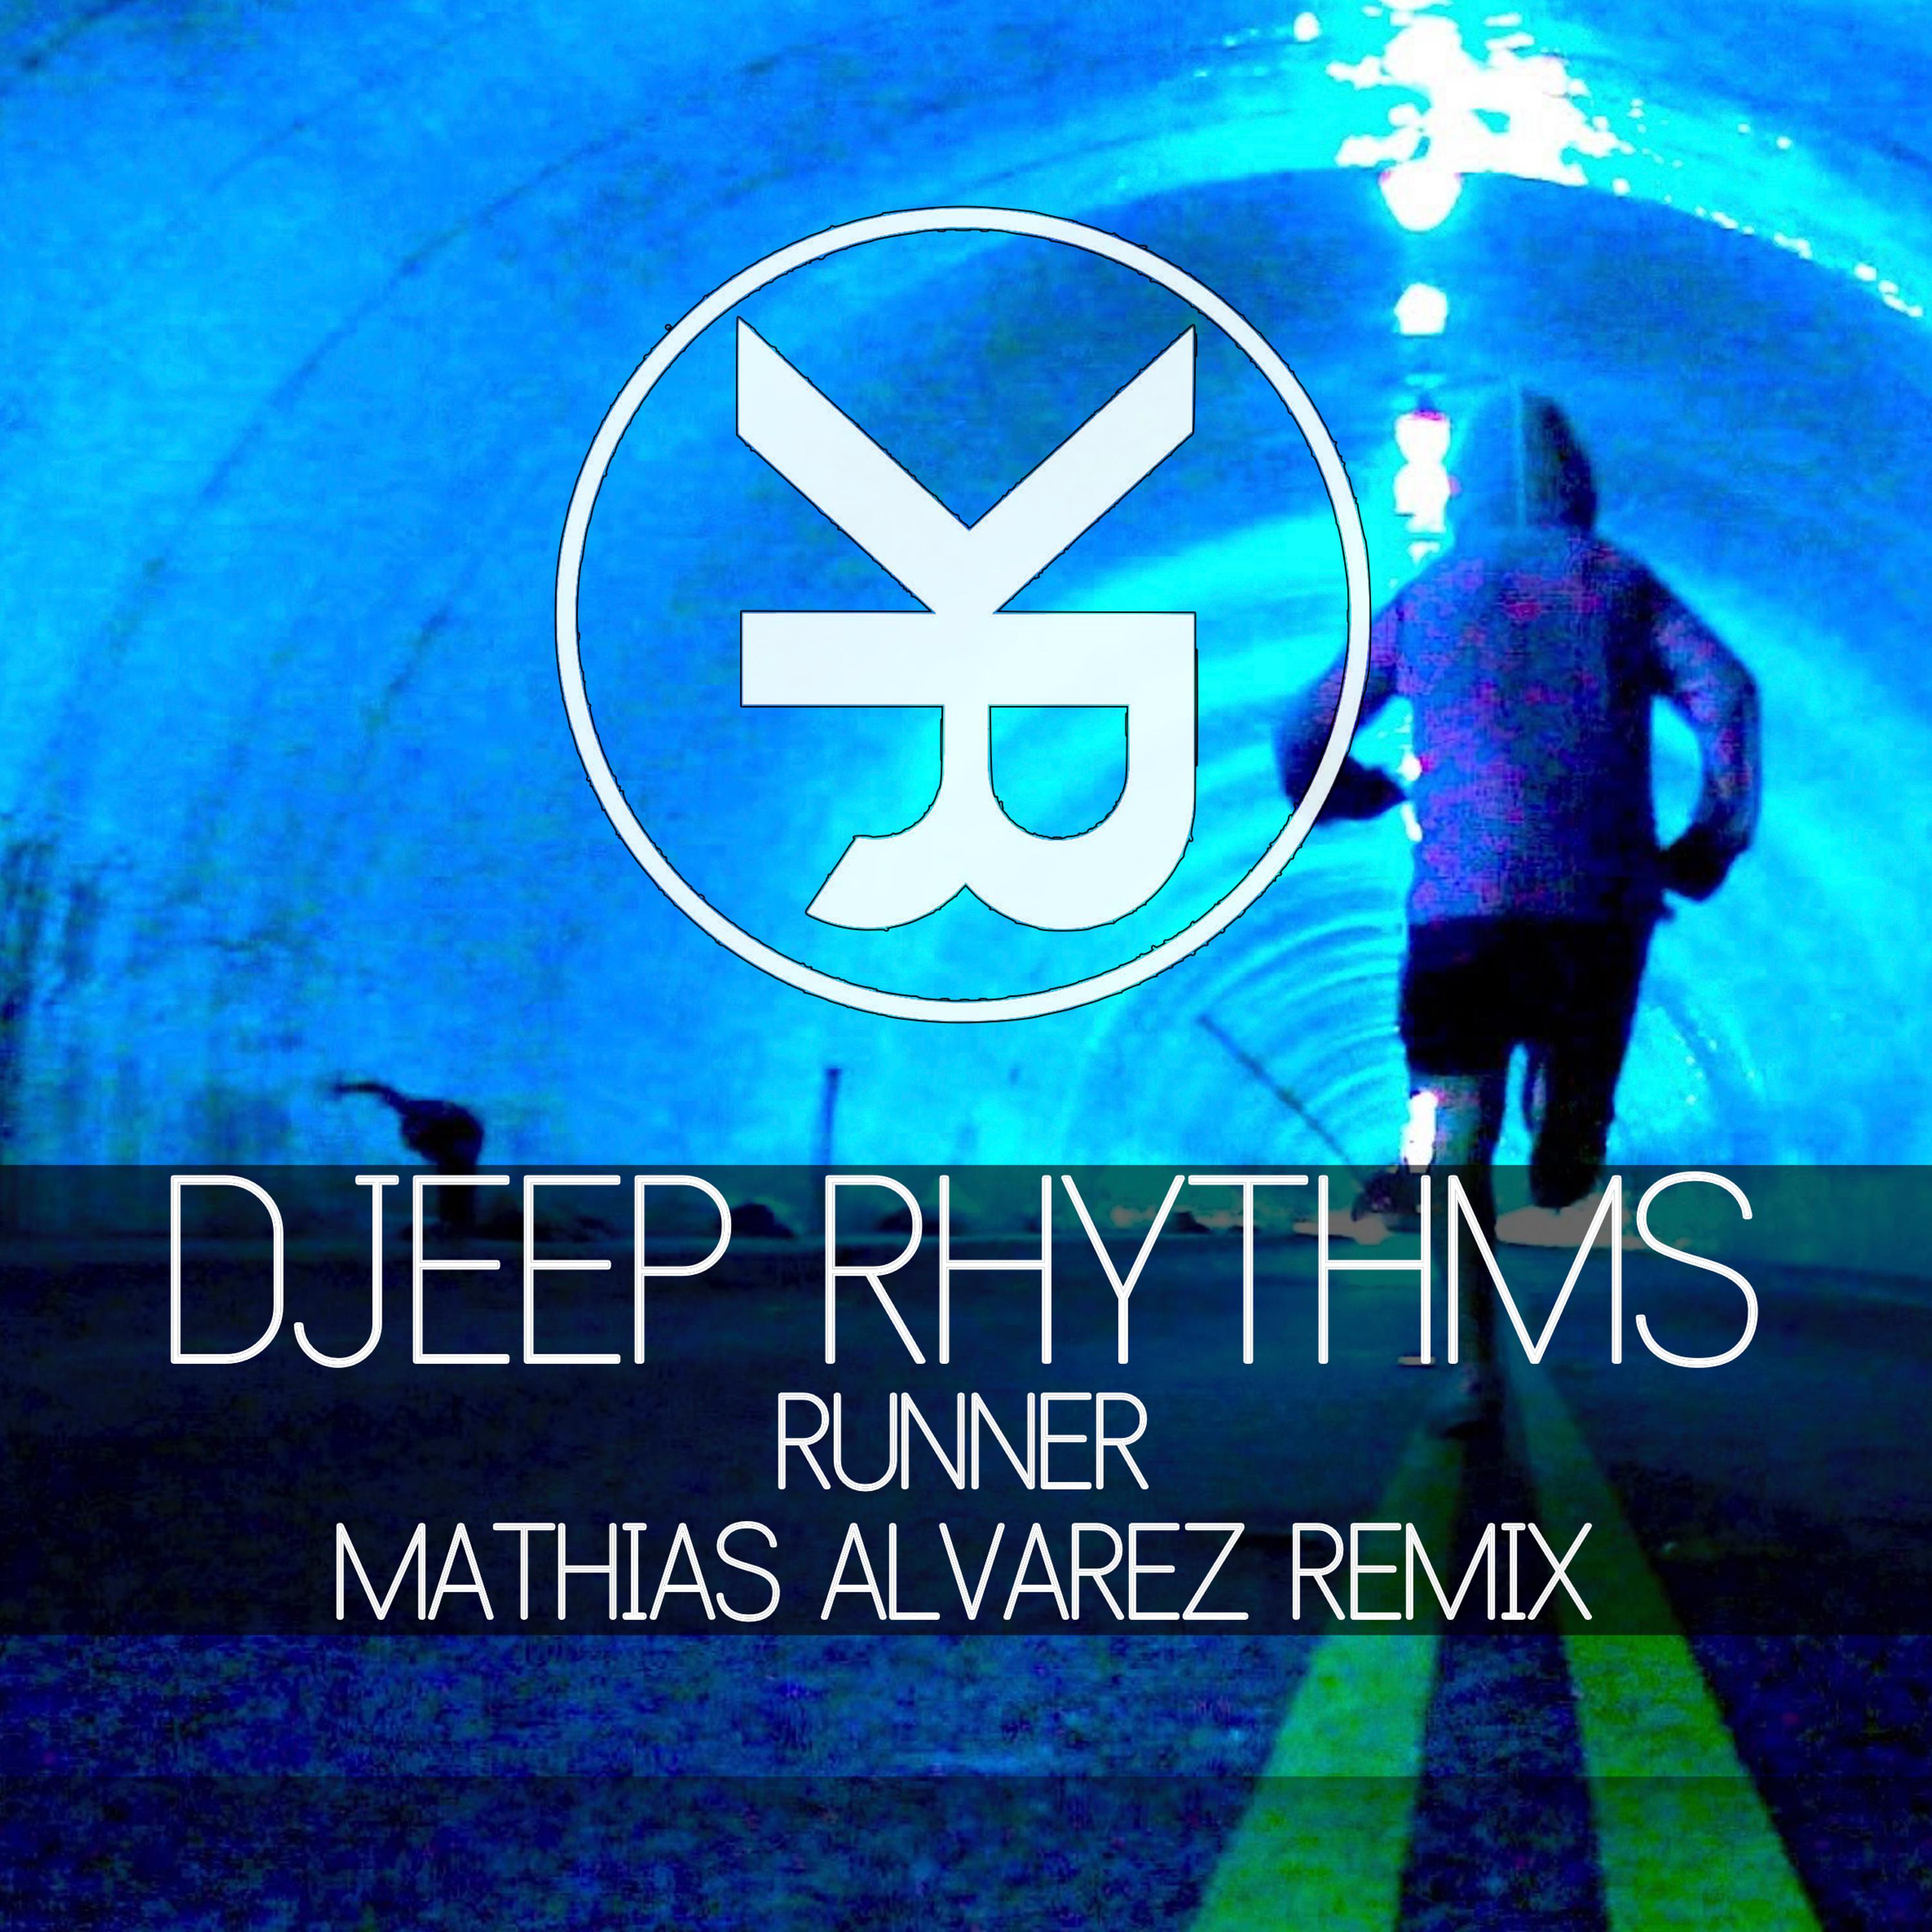 Runner (Mathias Alvarez Remix)